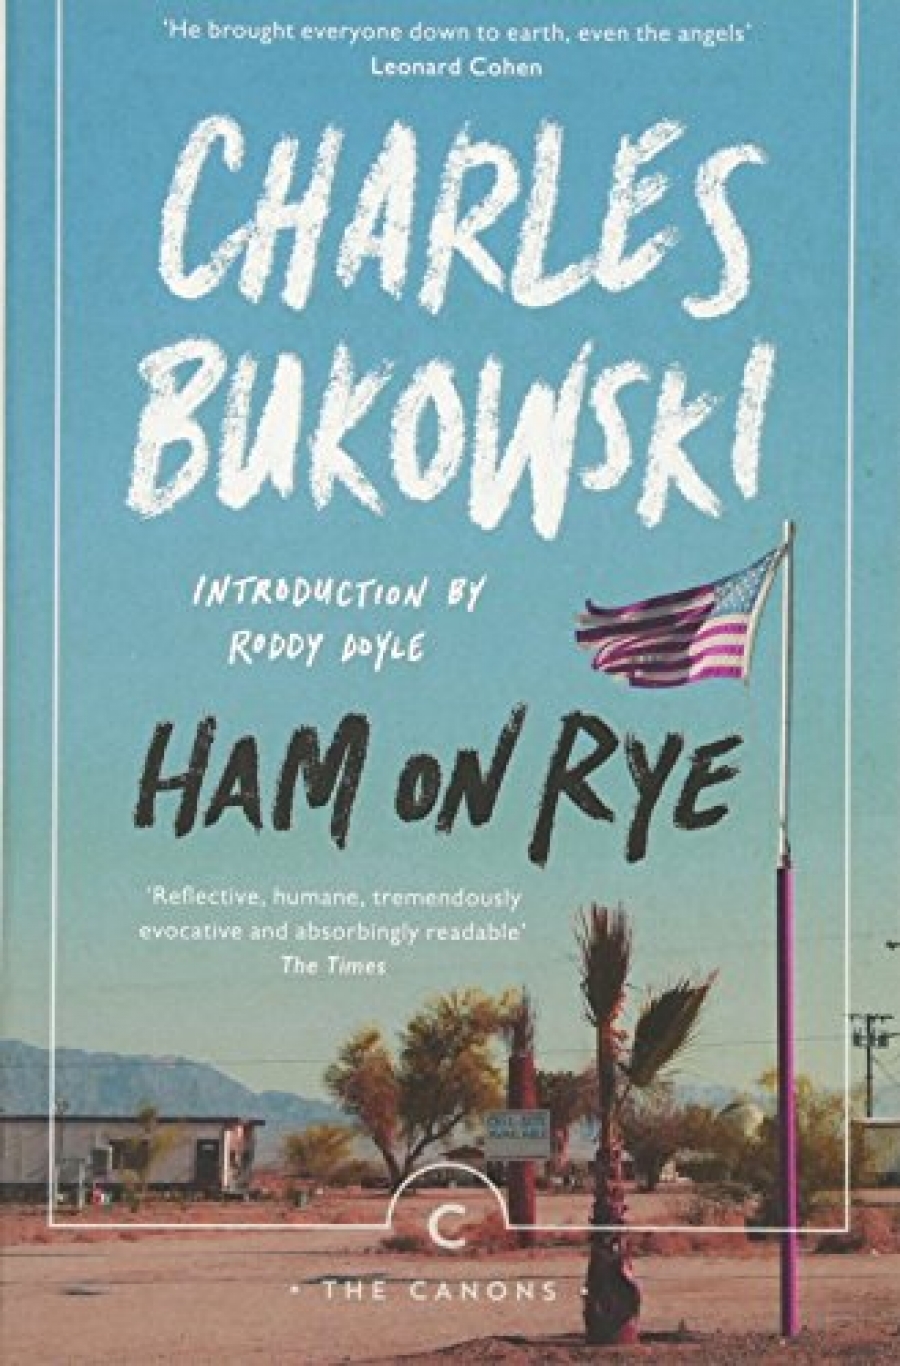 Bukowski Charles Ham on Rye 